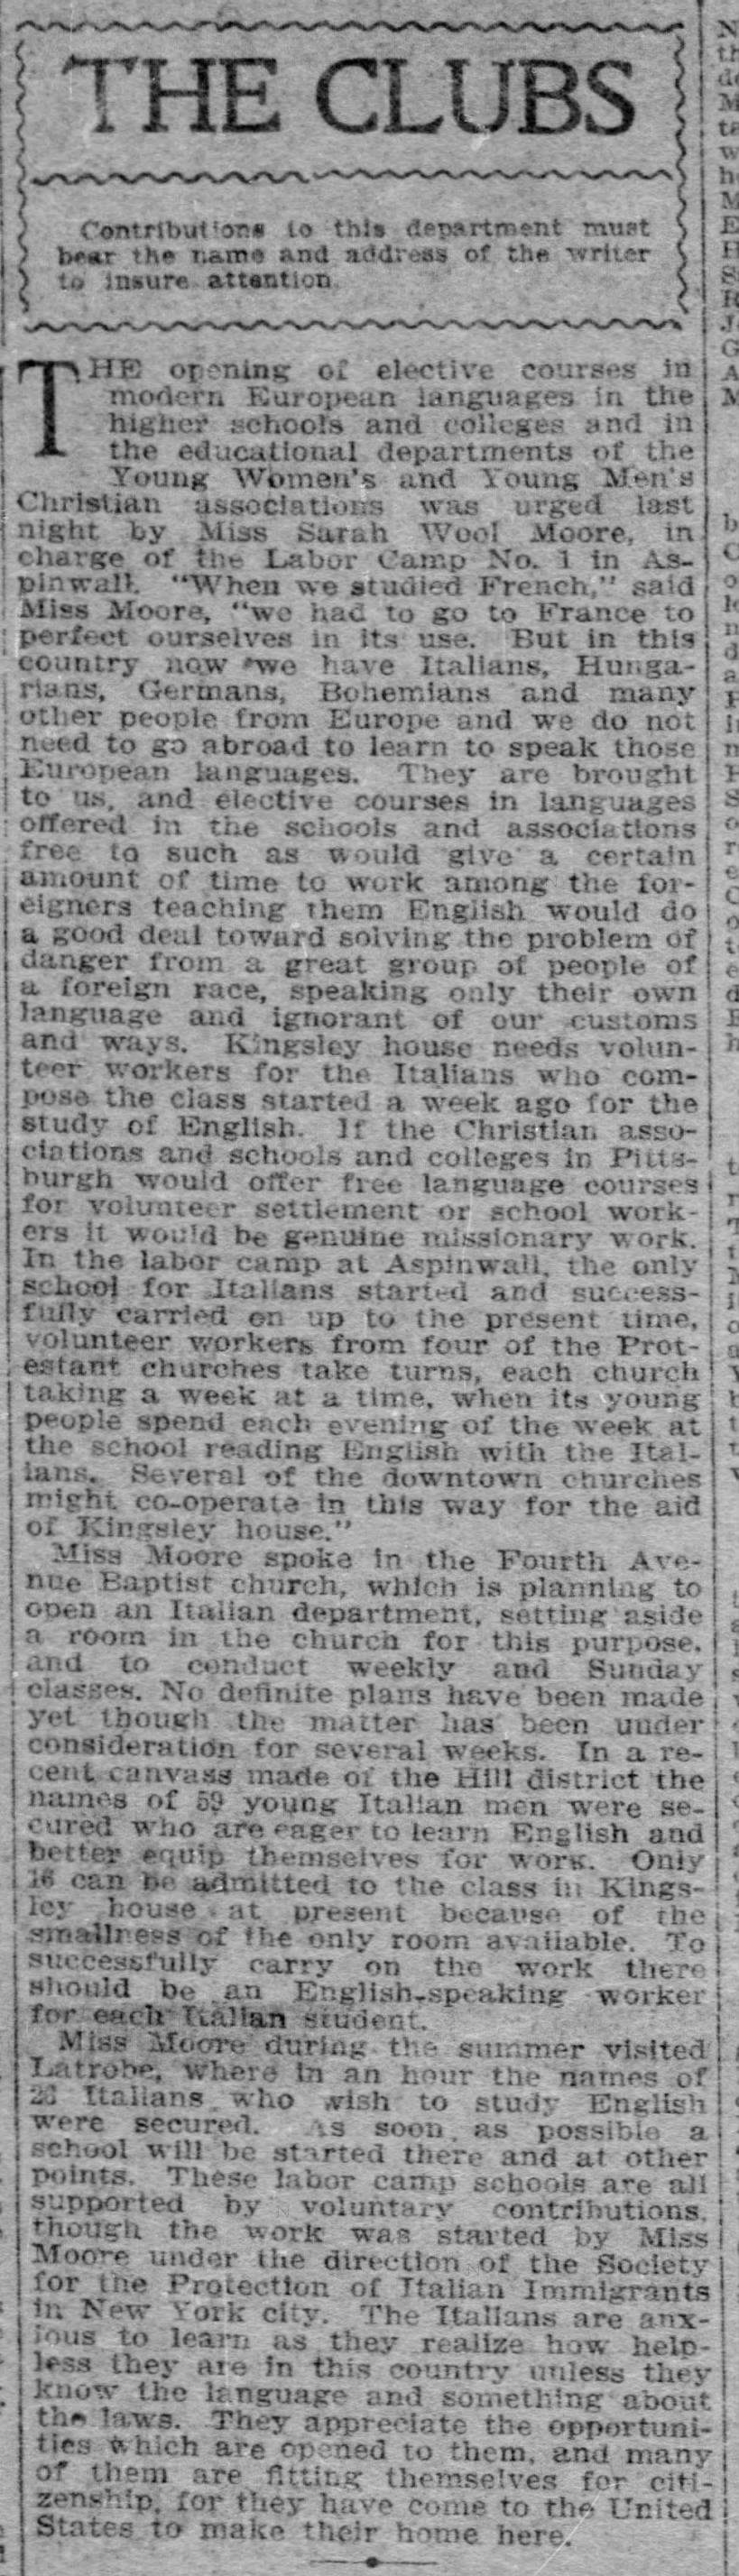 The Clubs. The Pittsburgh Post-Gazette (Pittsburgh, Pennsylvania) November 21, 1906, p 10